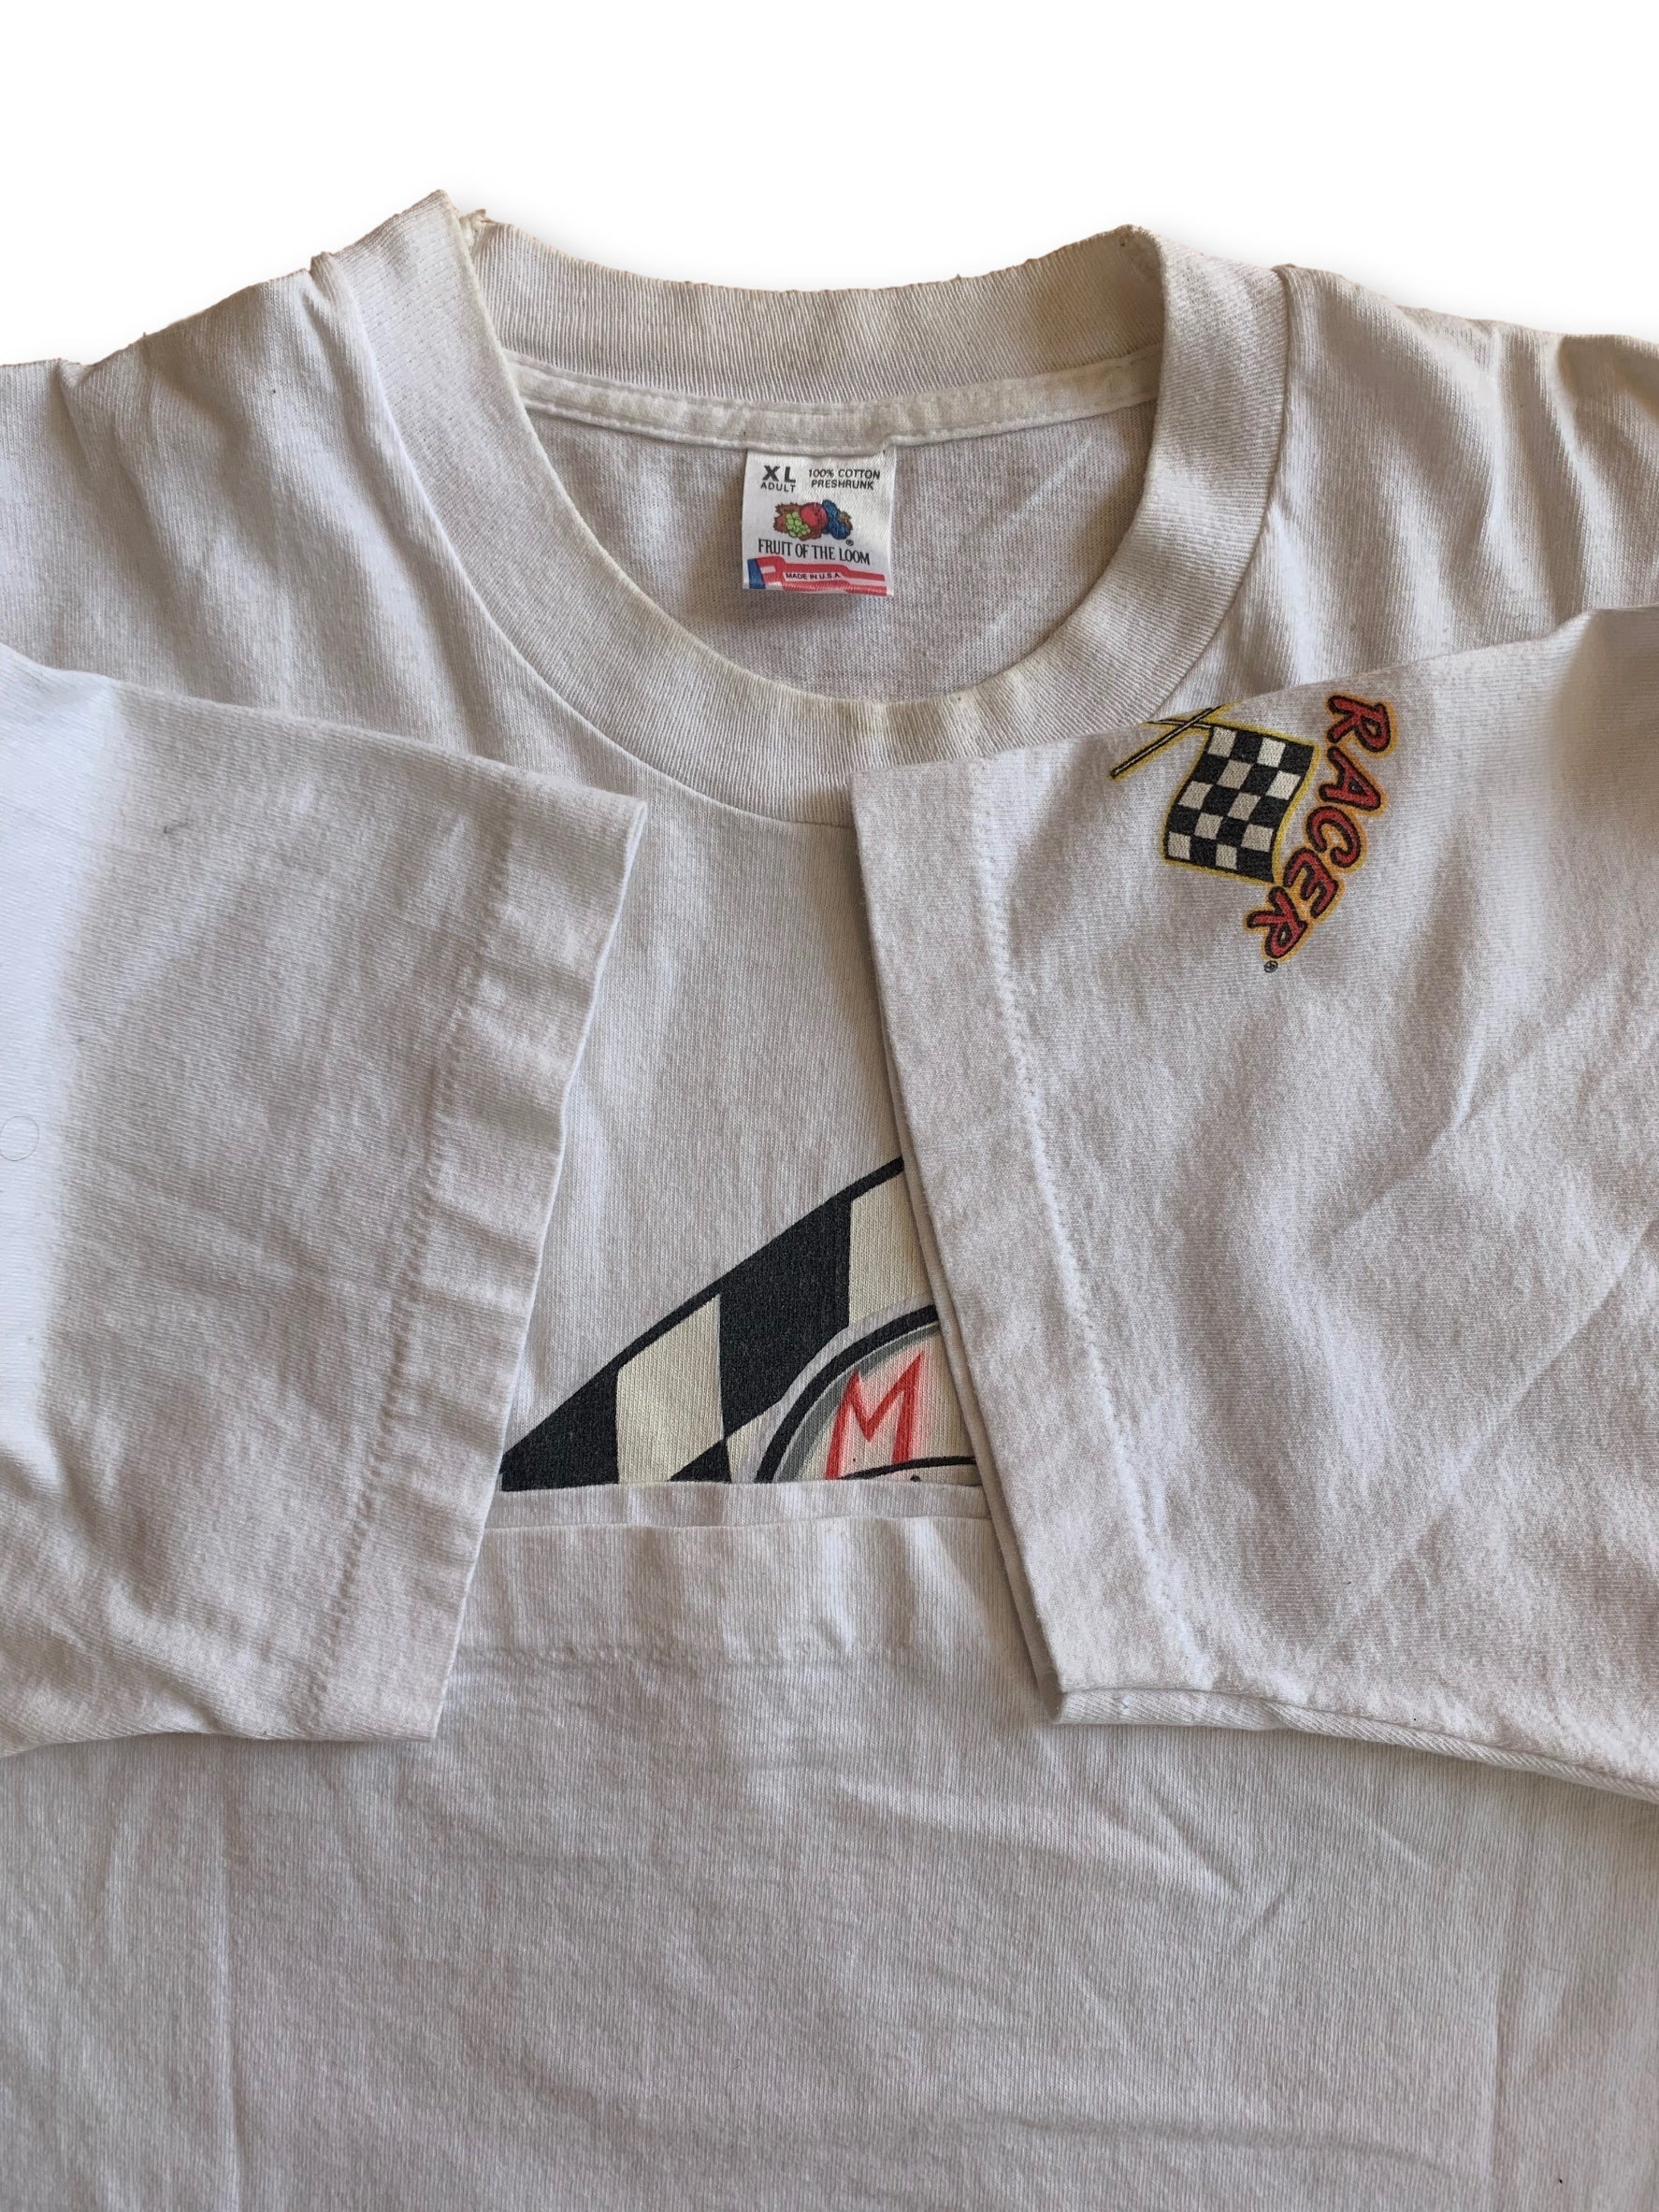 Vintage 1992 Speed Racer T-Shirt - XL